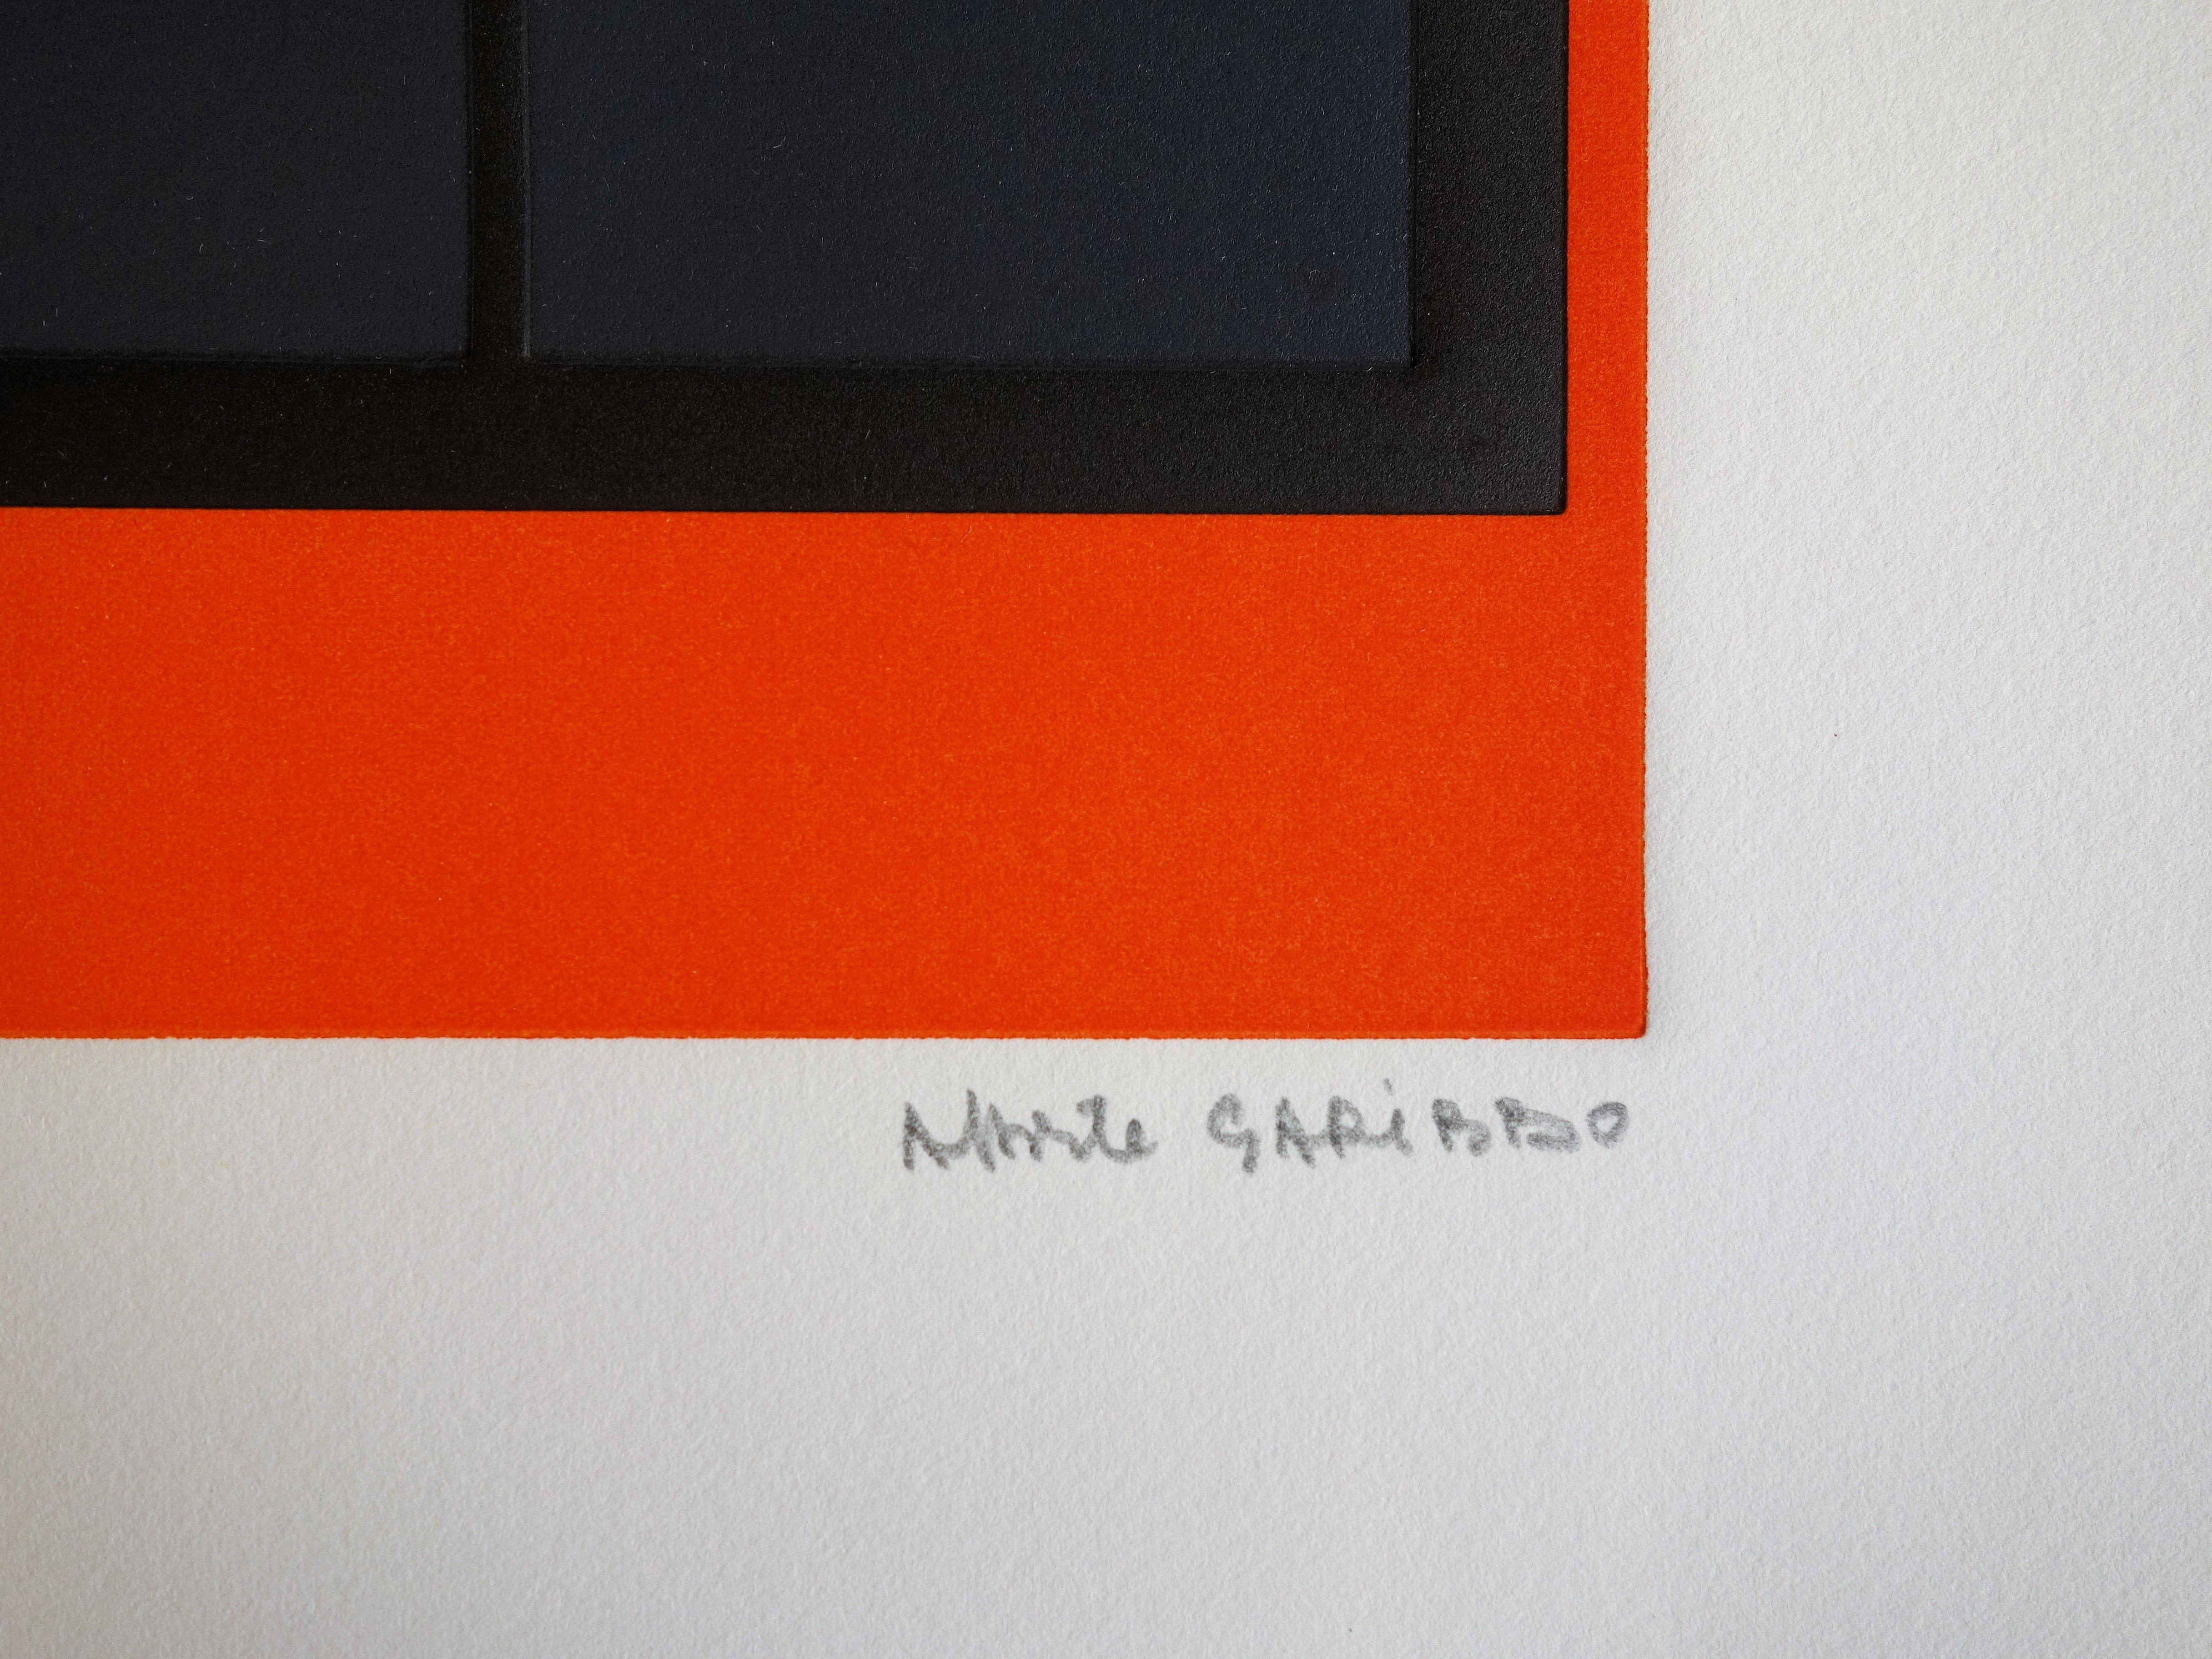 Black Squares on Orange - Original handsigned etching /60ex - Print by Alberte Garibbo